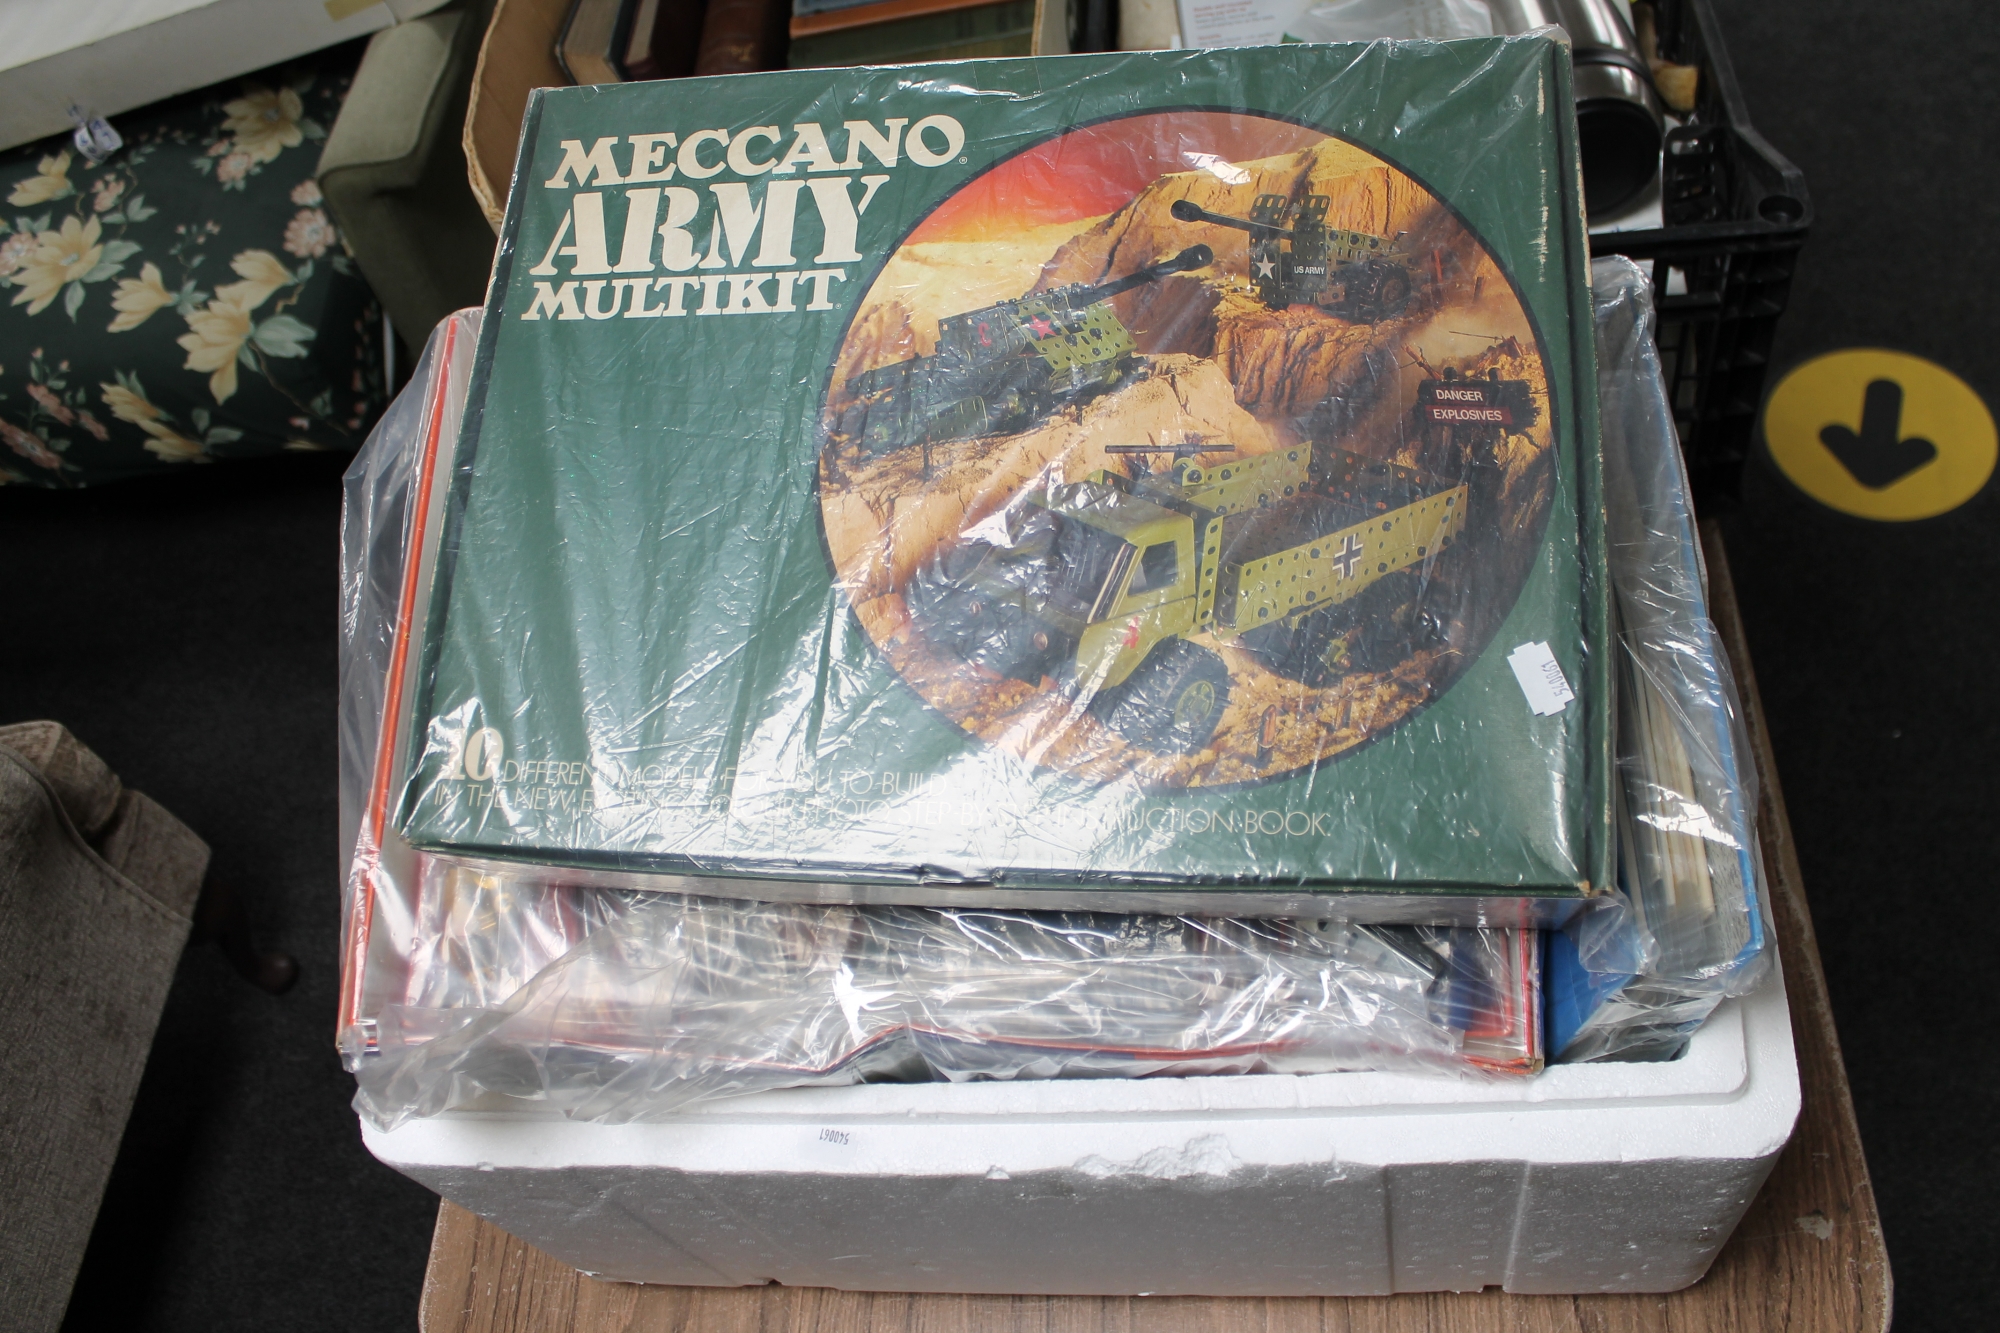 A box of Meccano and manuals